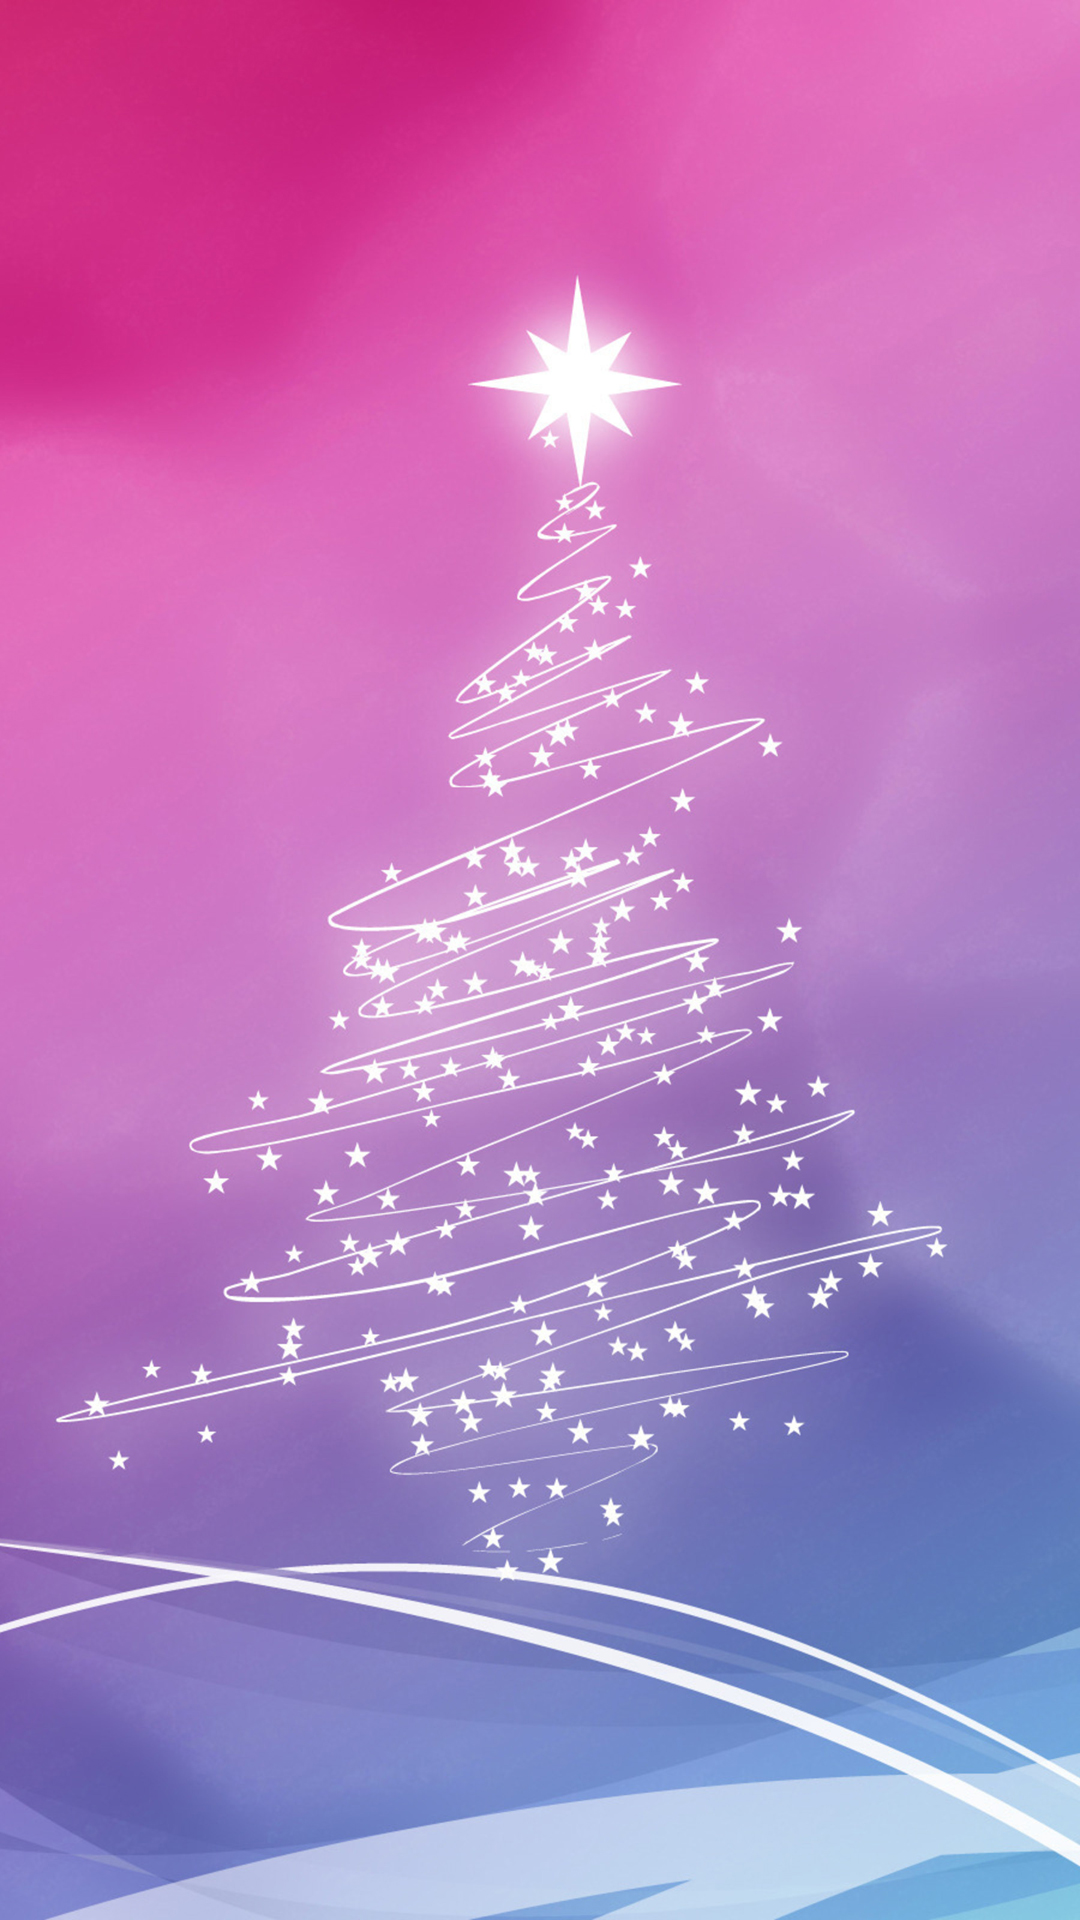 Christmas Tree iPhone Wallpaper HD